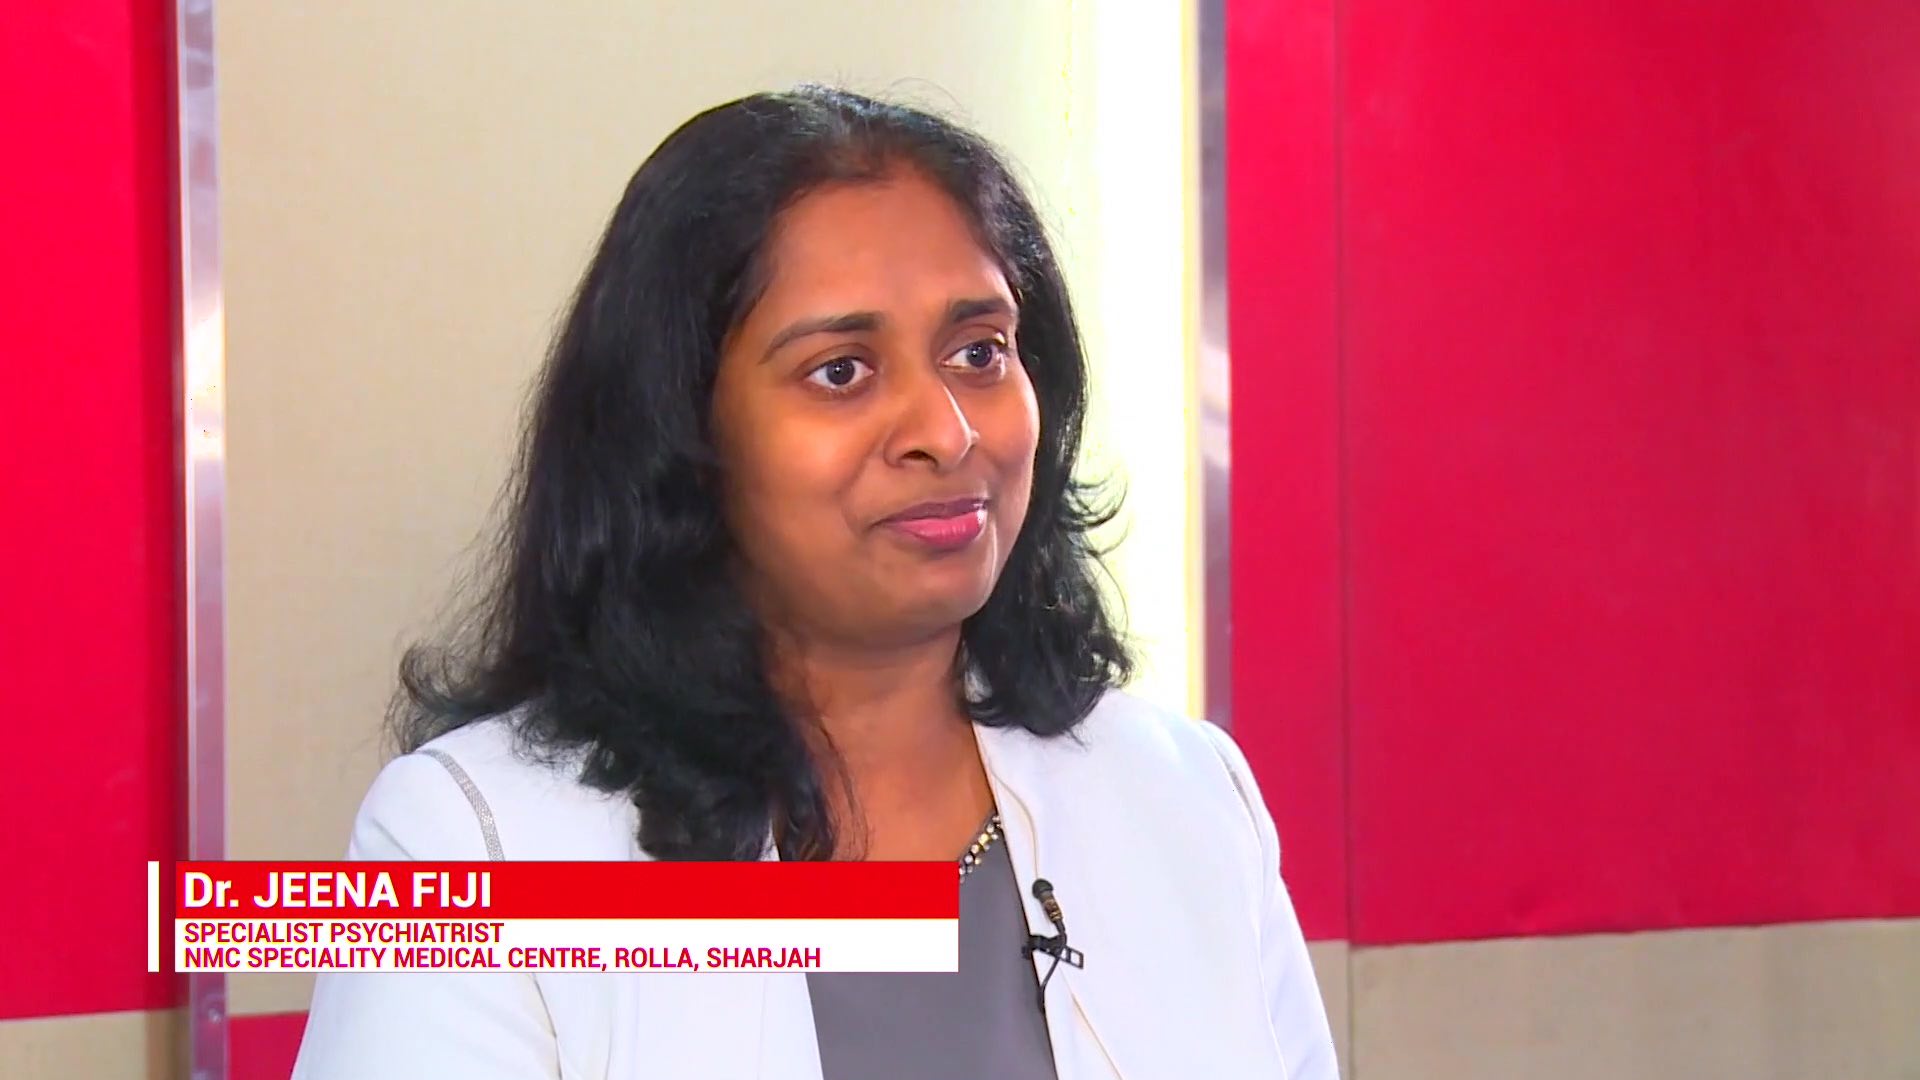 Ms. Niya Roy in conversation with Dr. Jeena Fiji